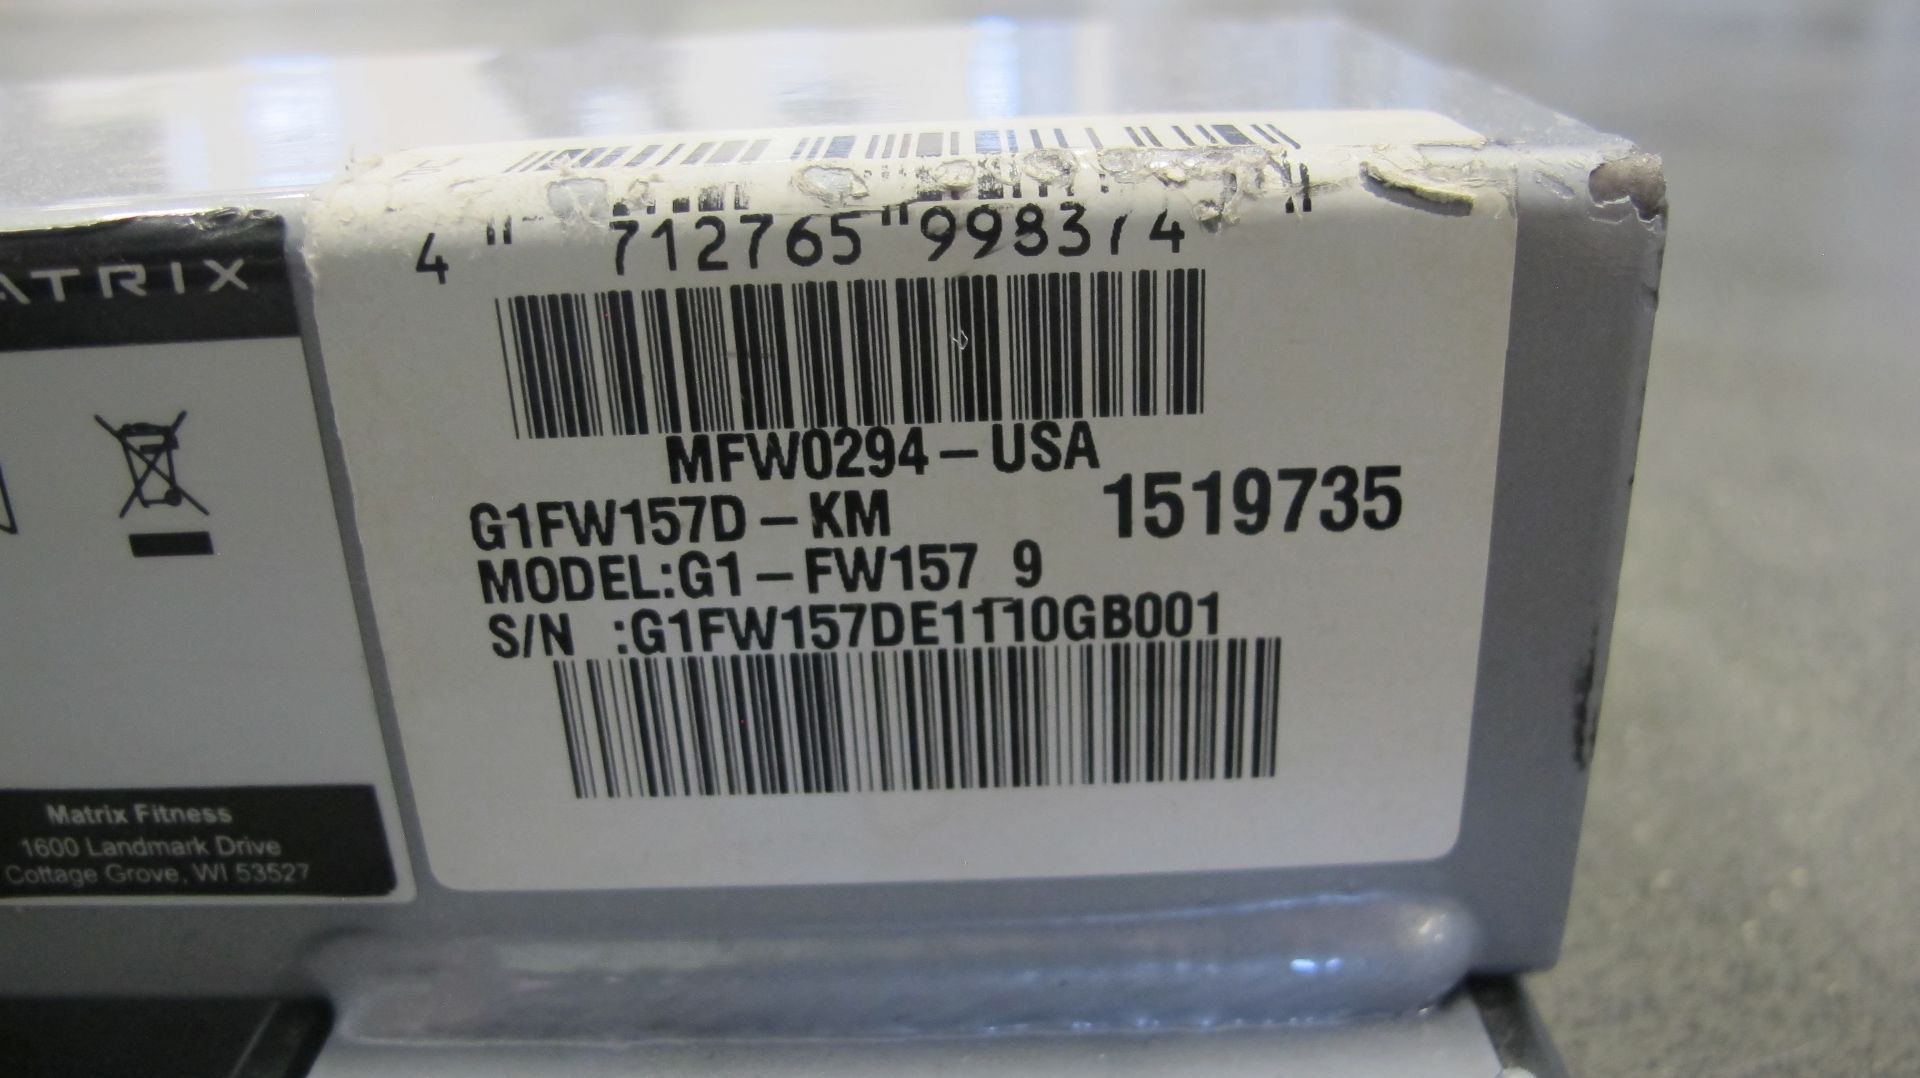 MATRIX G1-FW157 Plate Storage Rack, S/N: G1FW157DE1110GB001 - Image 4 of 4